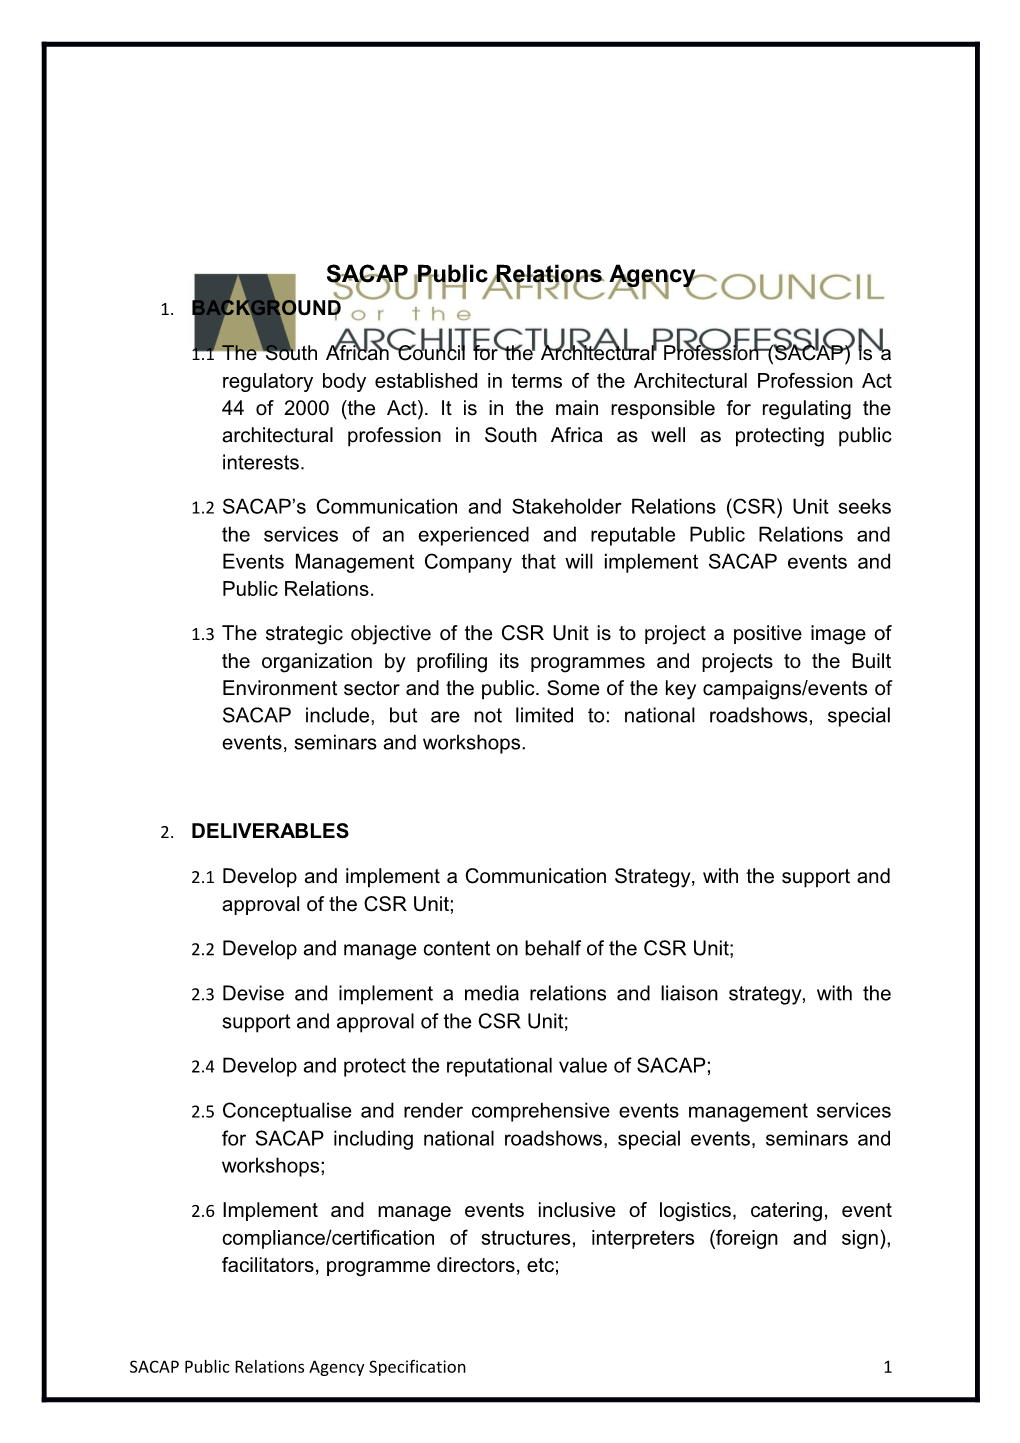 SACAP Public Relations Agency